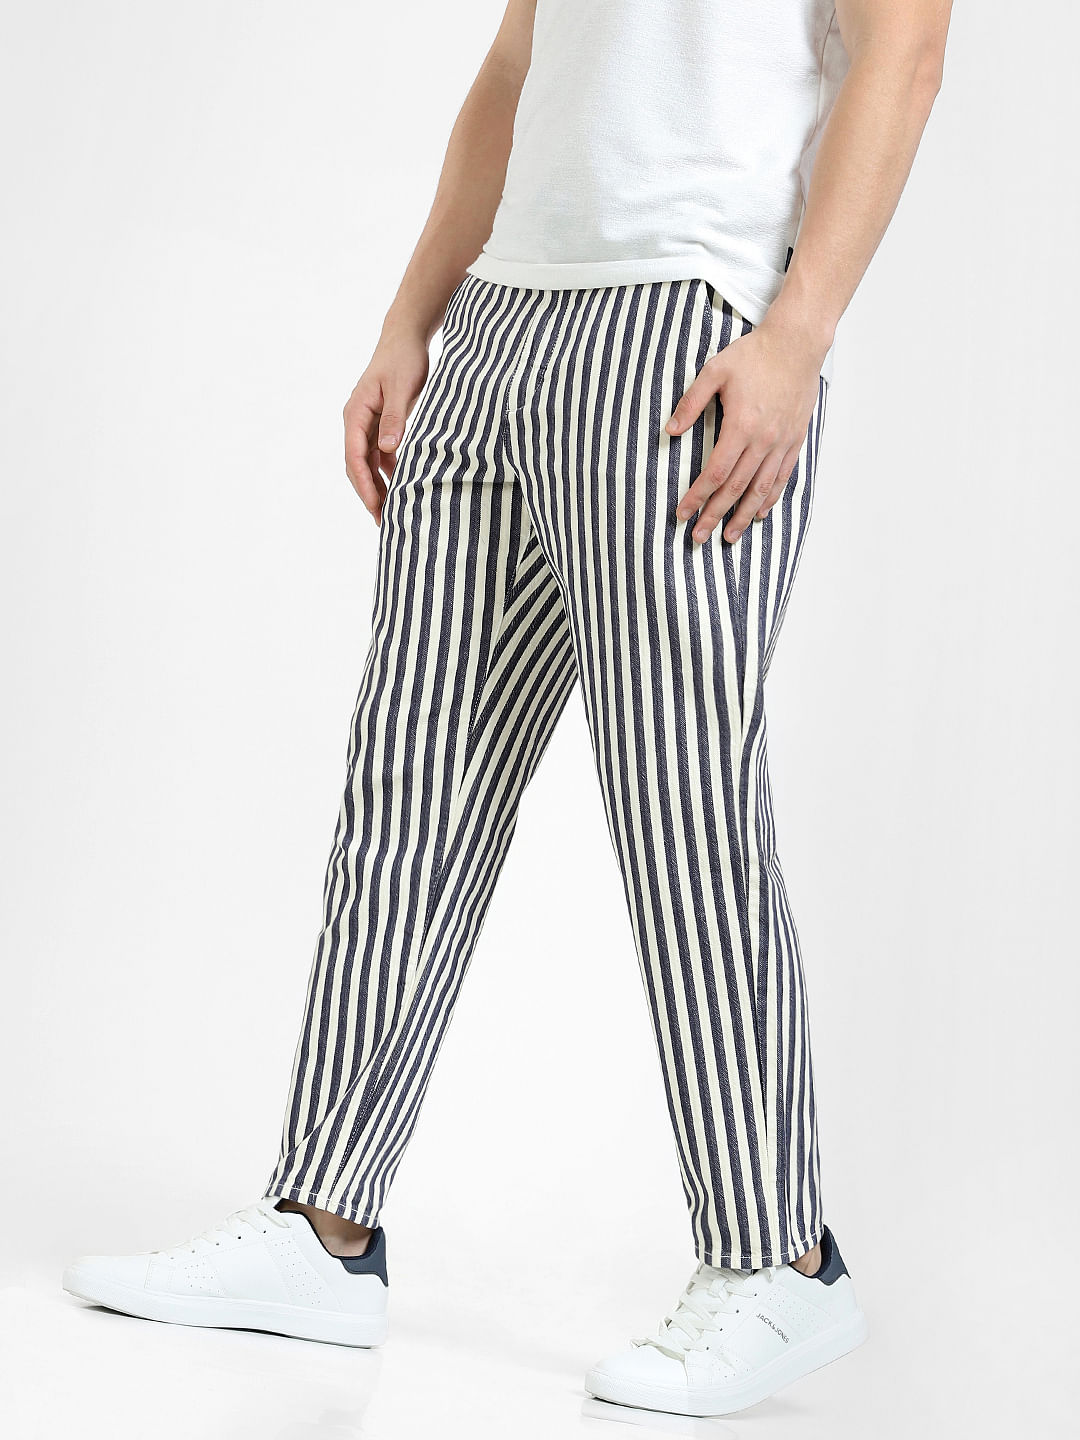 Buy Arrow Men Dark Brown Flat Front Striped Formal Trousers - NNNOW.com